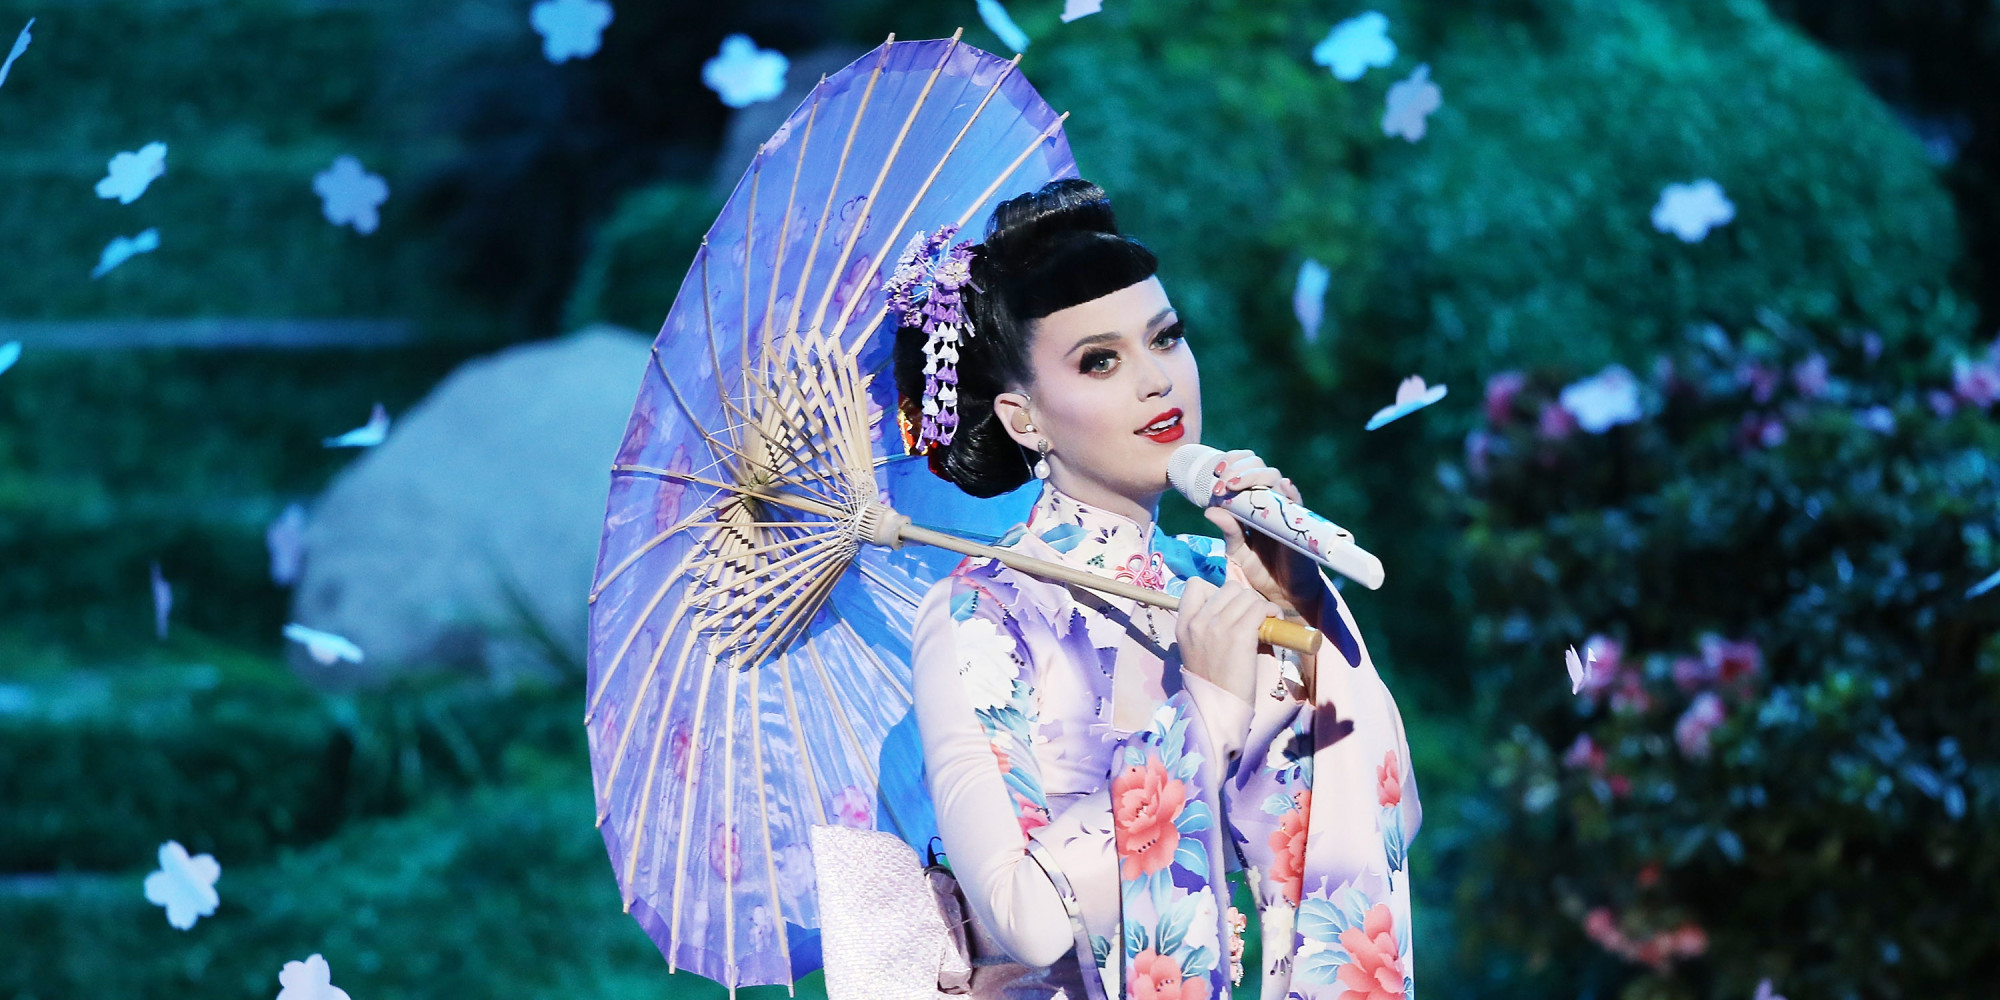 Katy Perry performing as a geisha at the 2013 American Music Awards